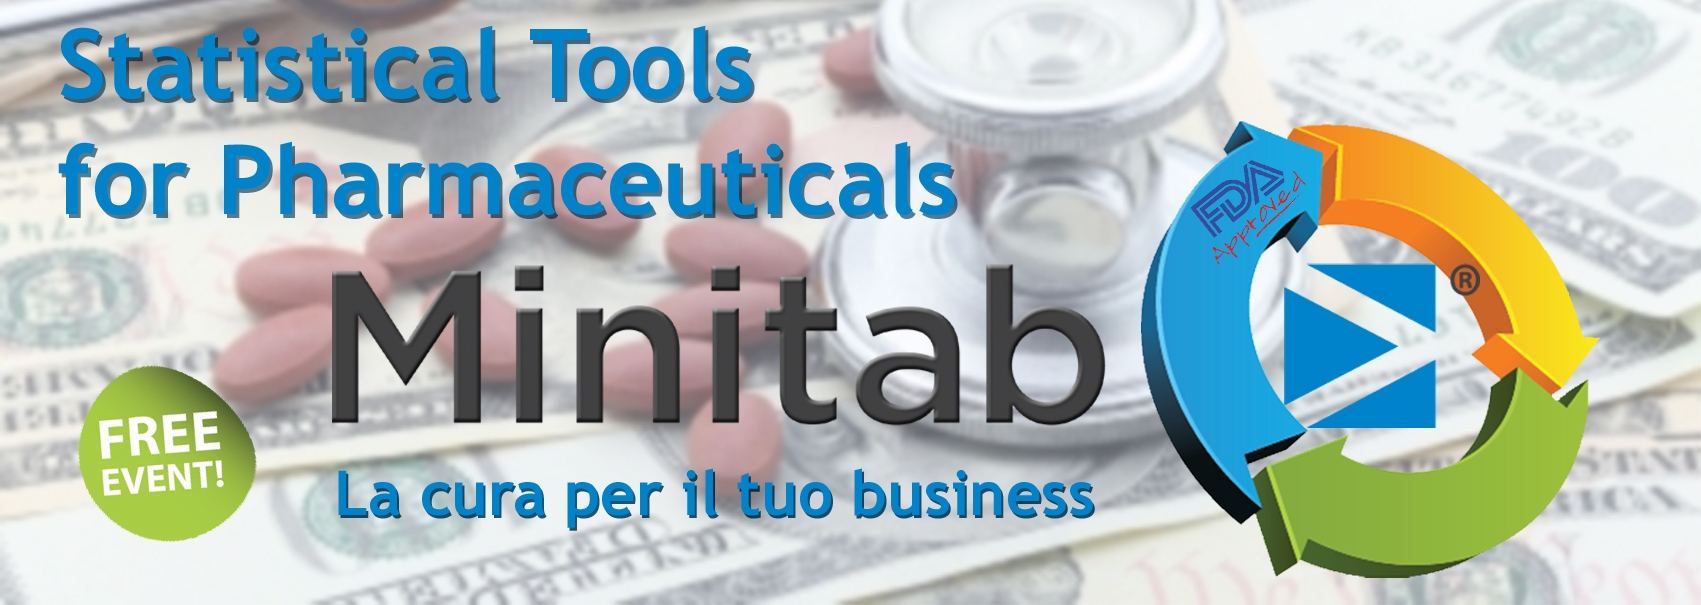 Minitab_Pharma-copia Minitab - Seminario Gratuito Statistical Tools for Pharmaceuticals. Firenze, 19 Ottobre 2016 